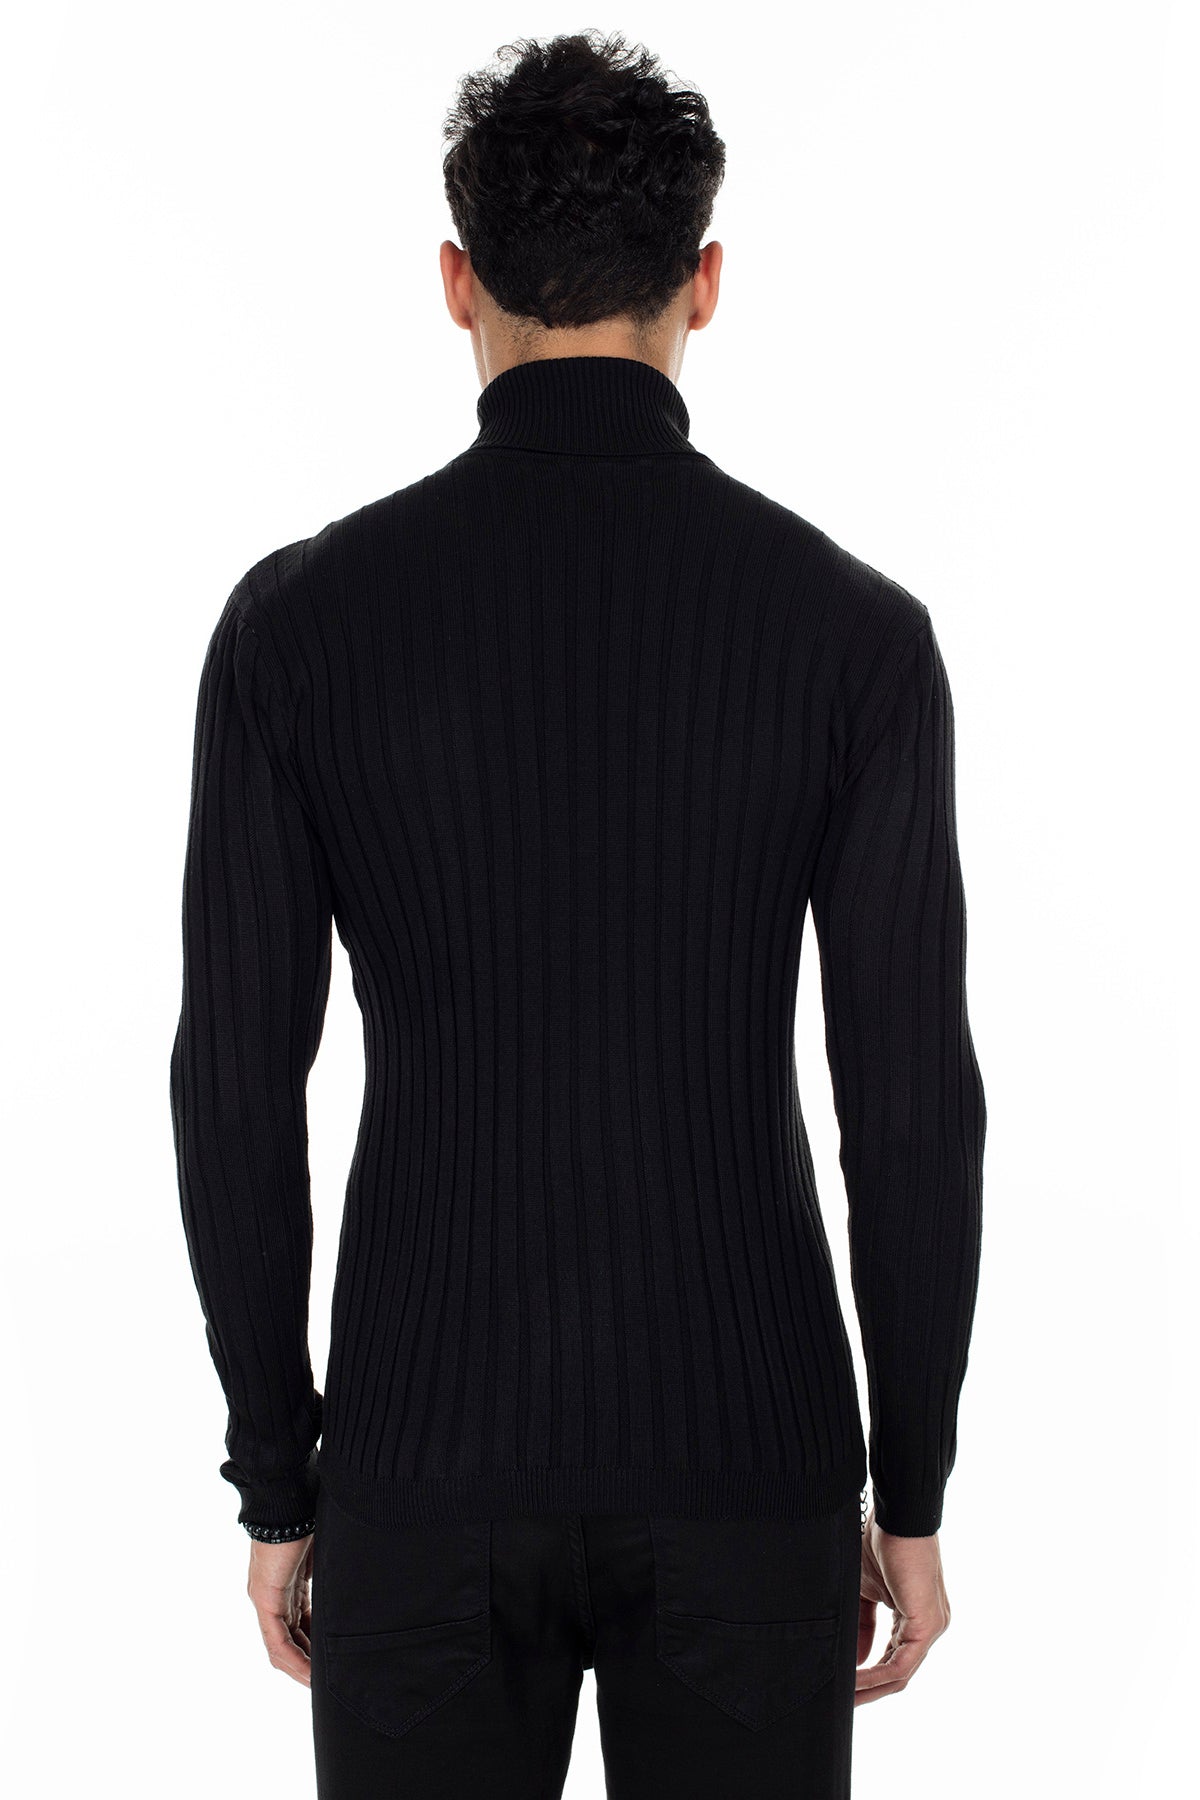 Buratti Ribbed Turtleneck Slim Fit Men's Sweater - BLACK